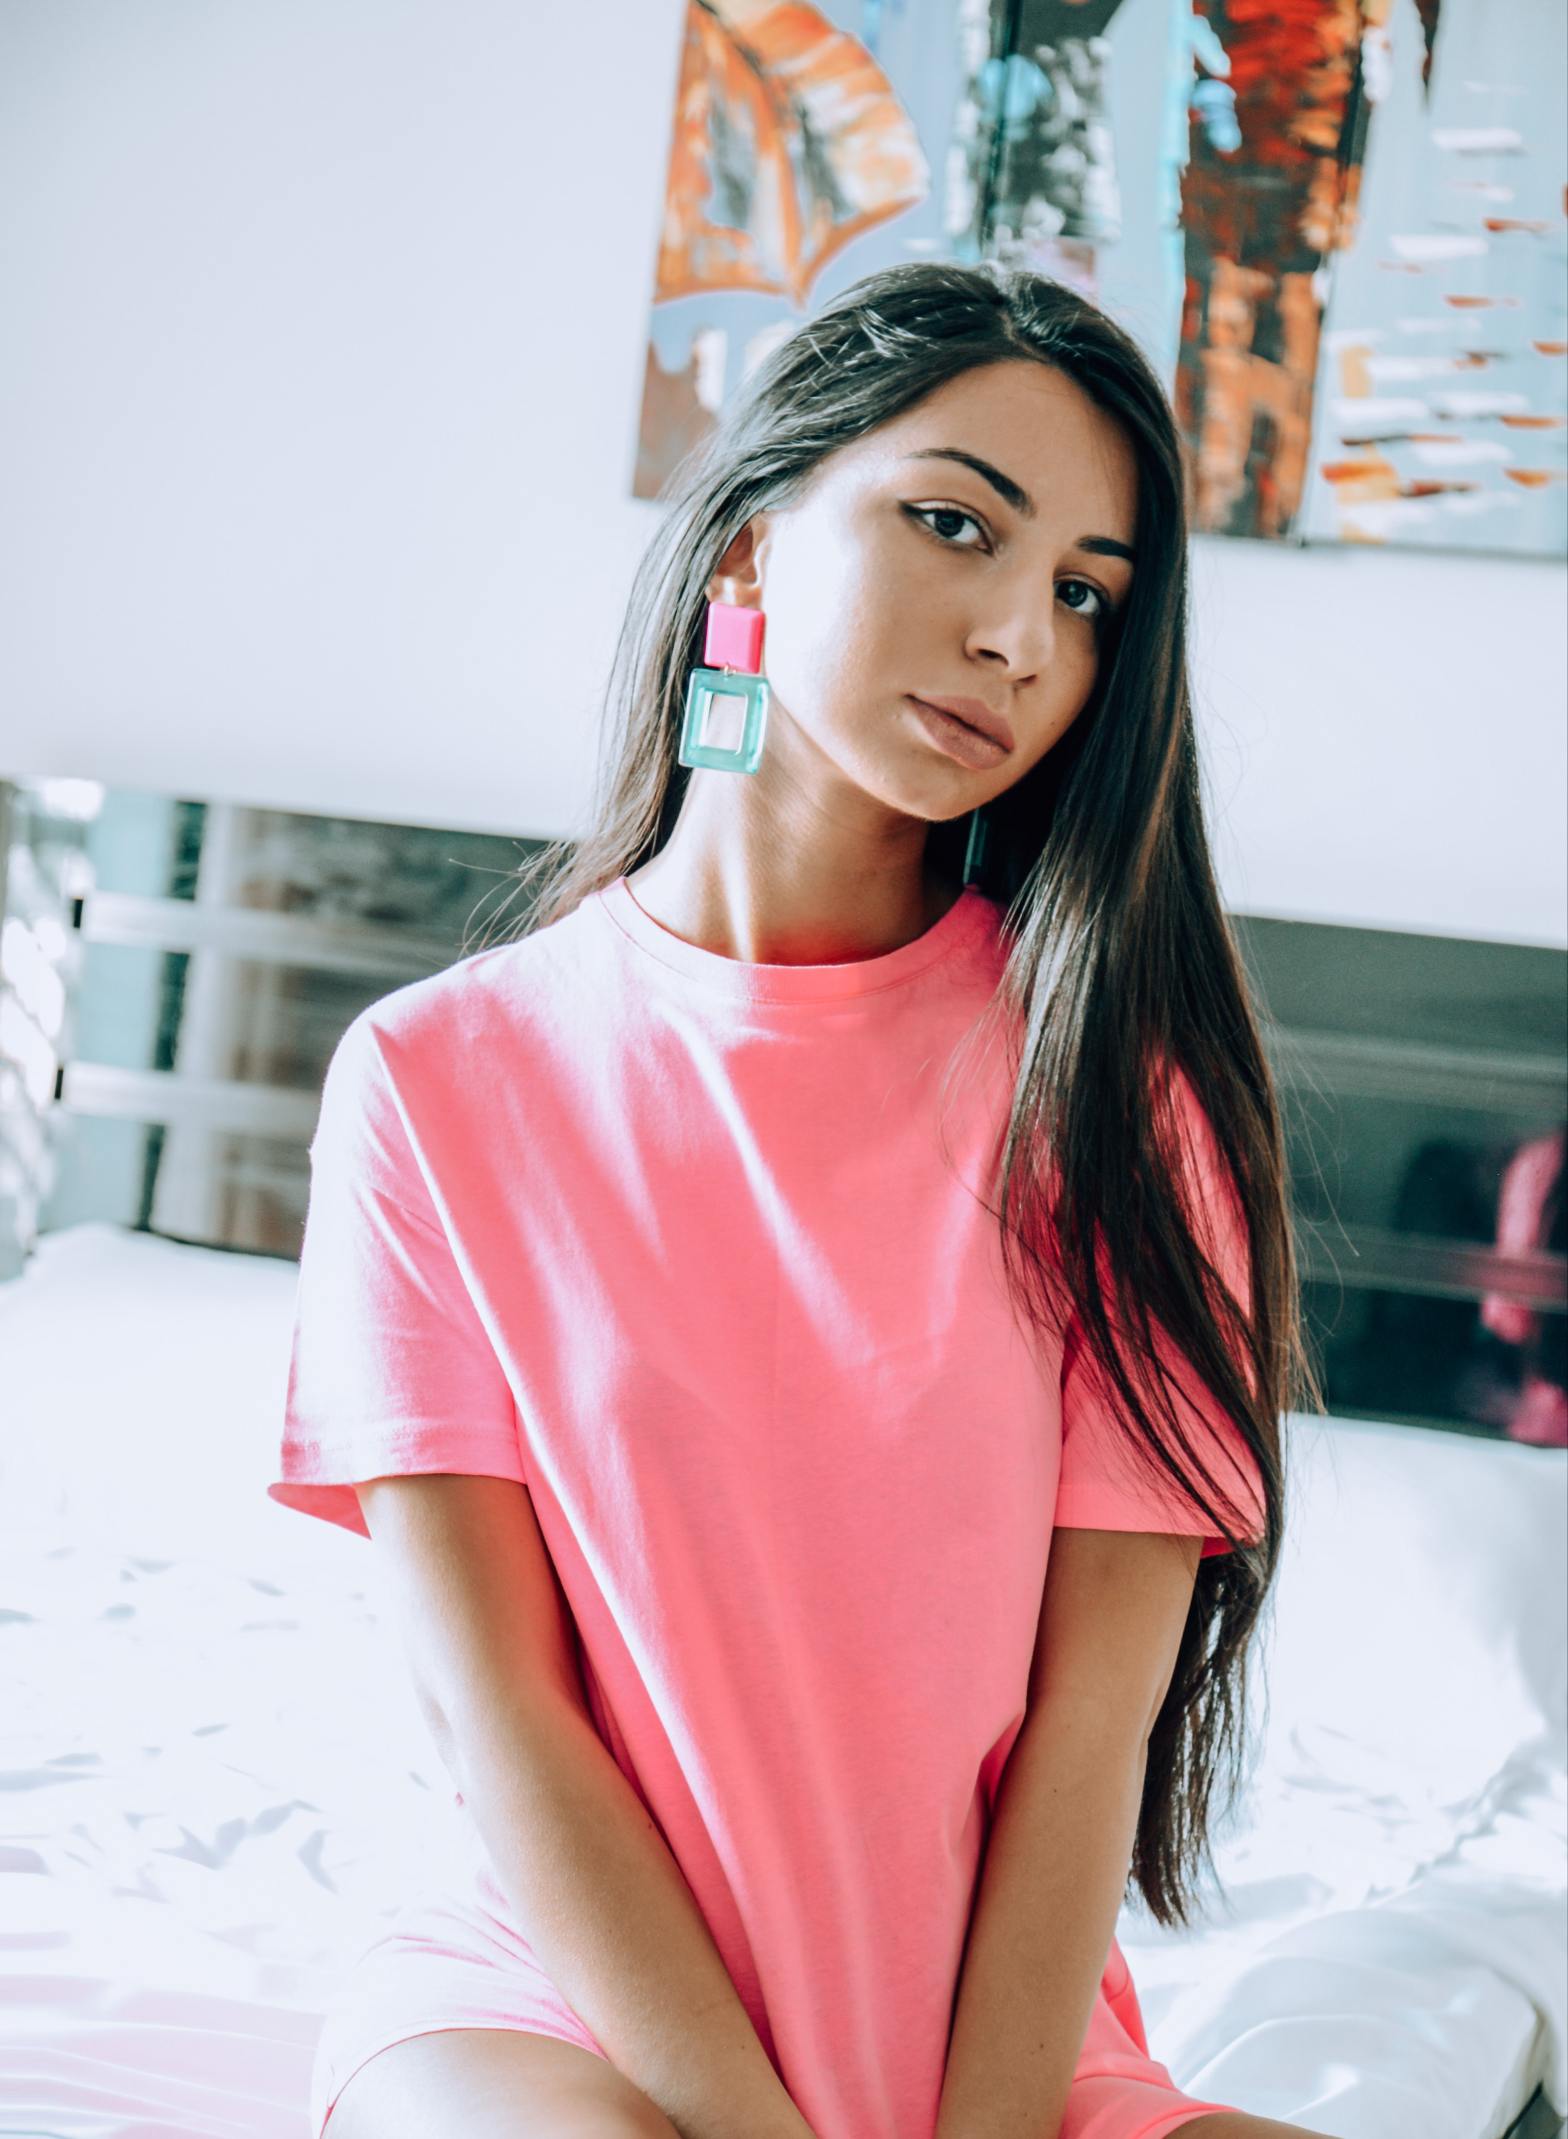 Girl in a plain pink shirt